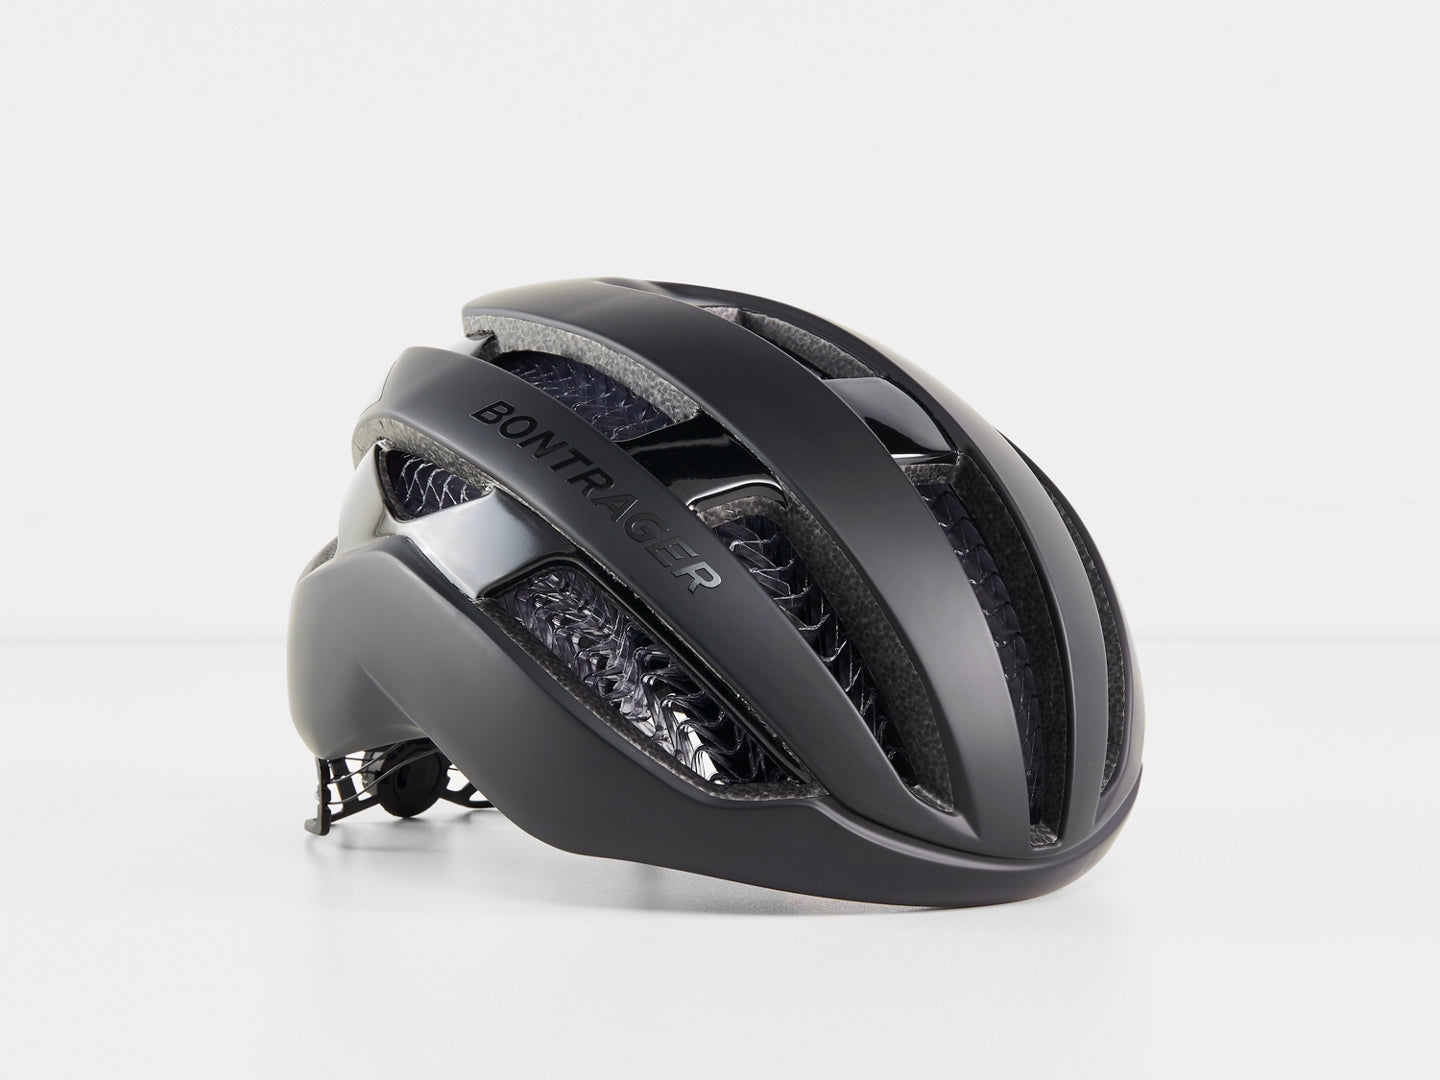 Bontrager Circuit WaveCel Road Bike Helmet- Bikes Helmet- Wavecel Technology- Boa Fit System- Recycled Material